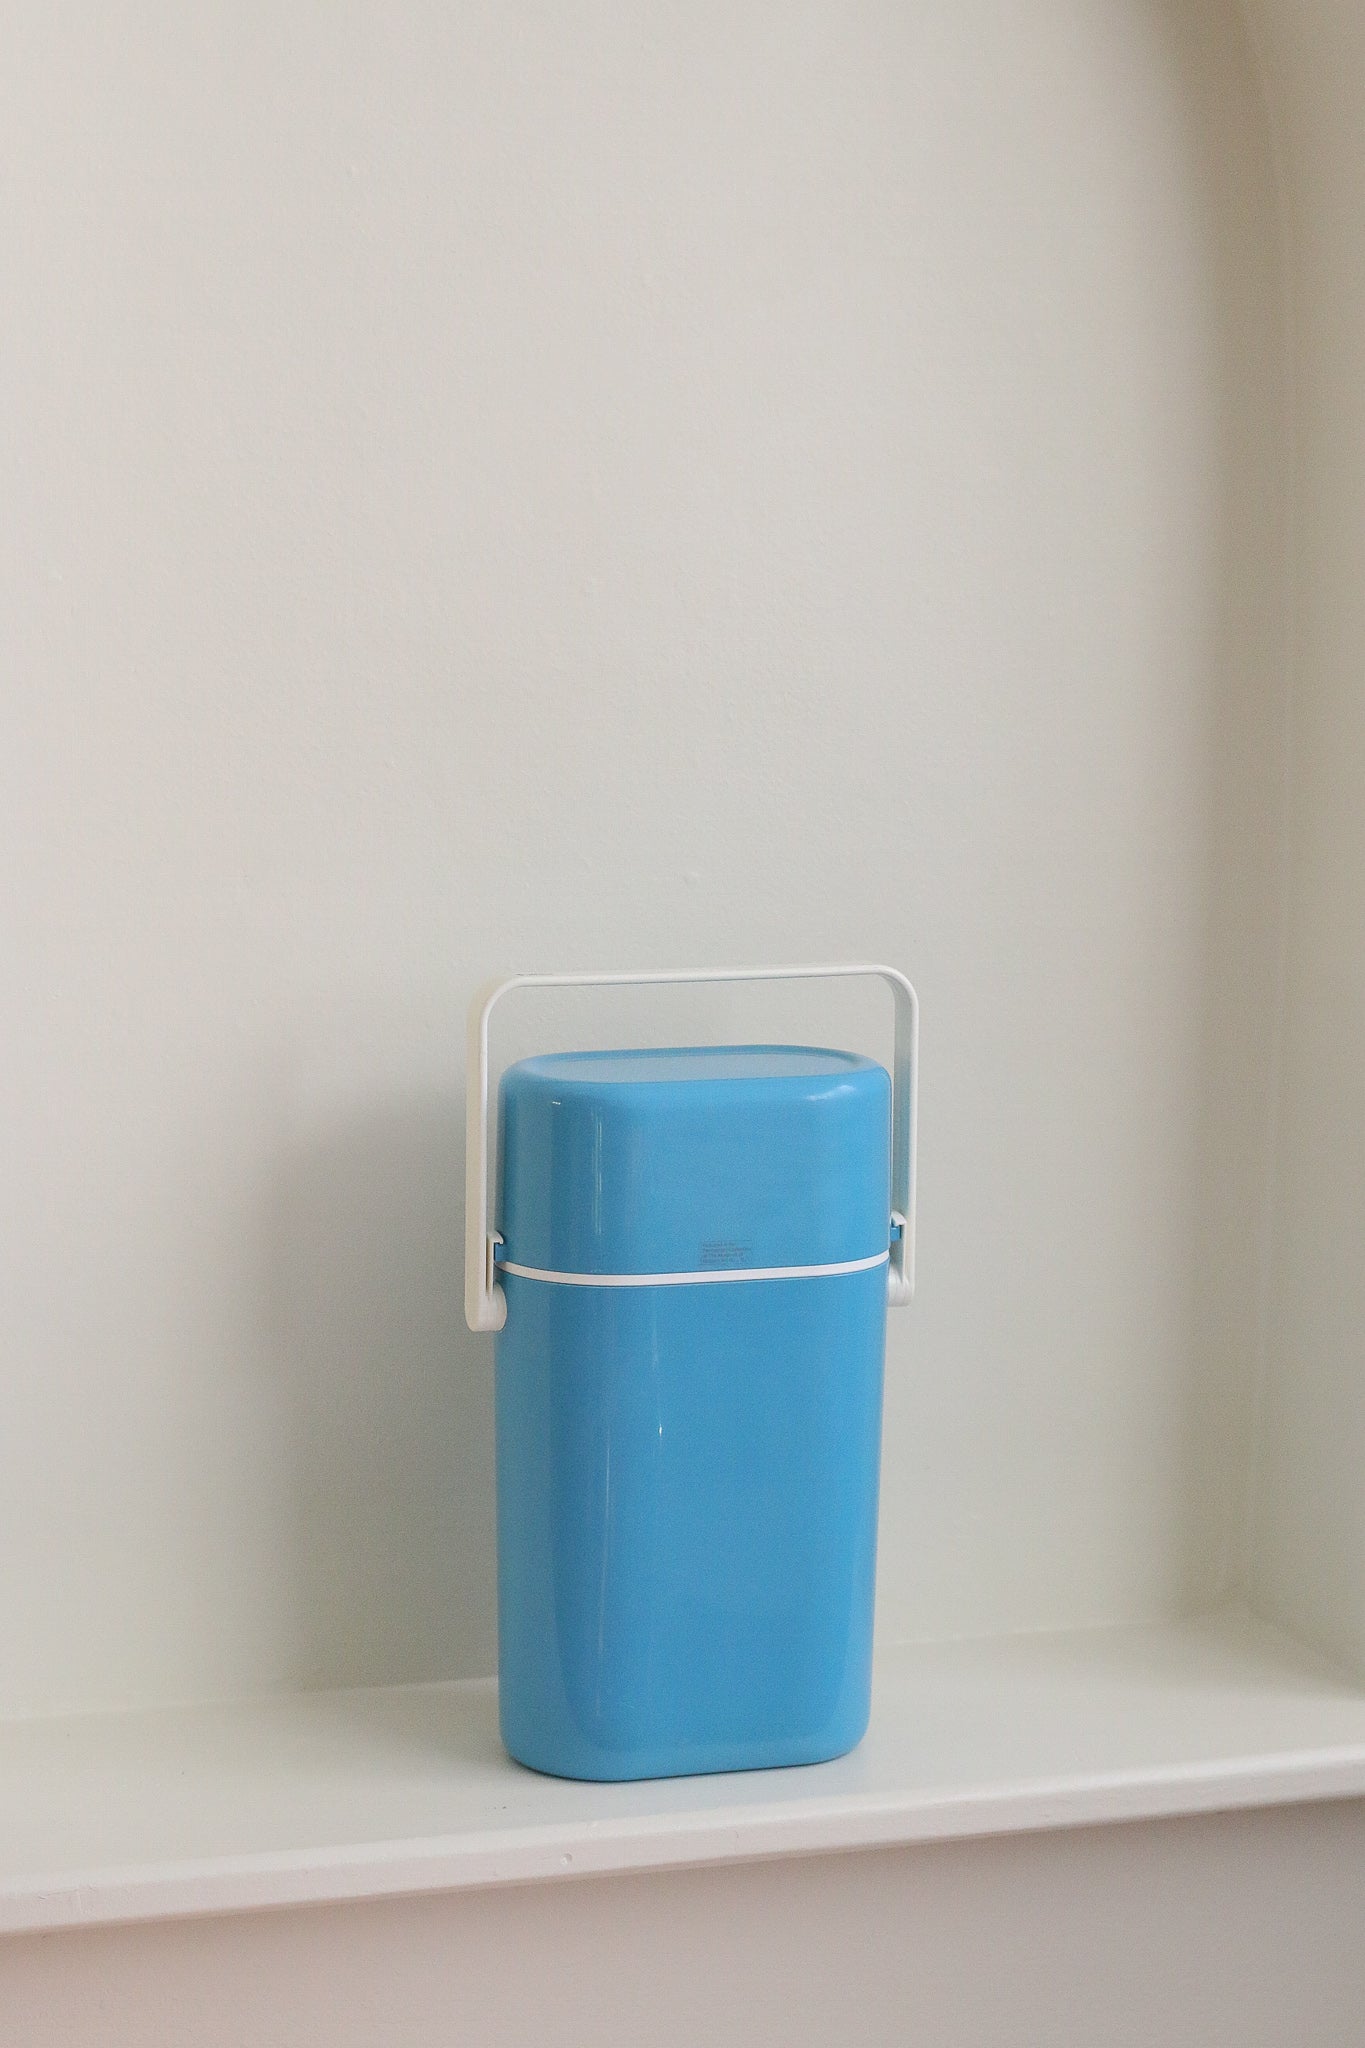 1978 Decor BYO Wine Cooler ~ Blue